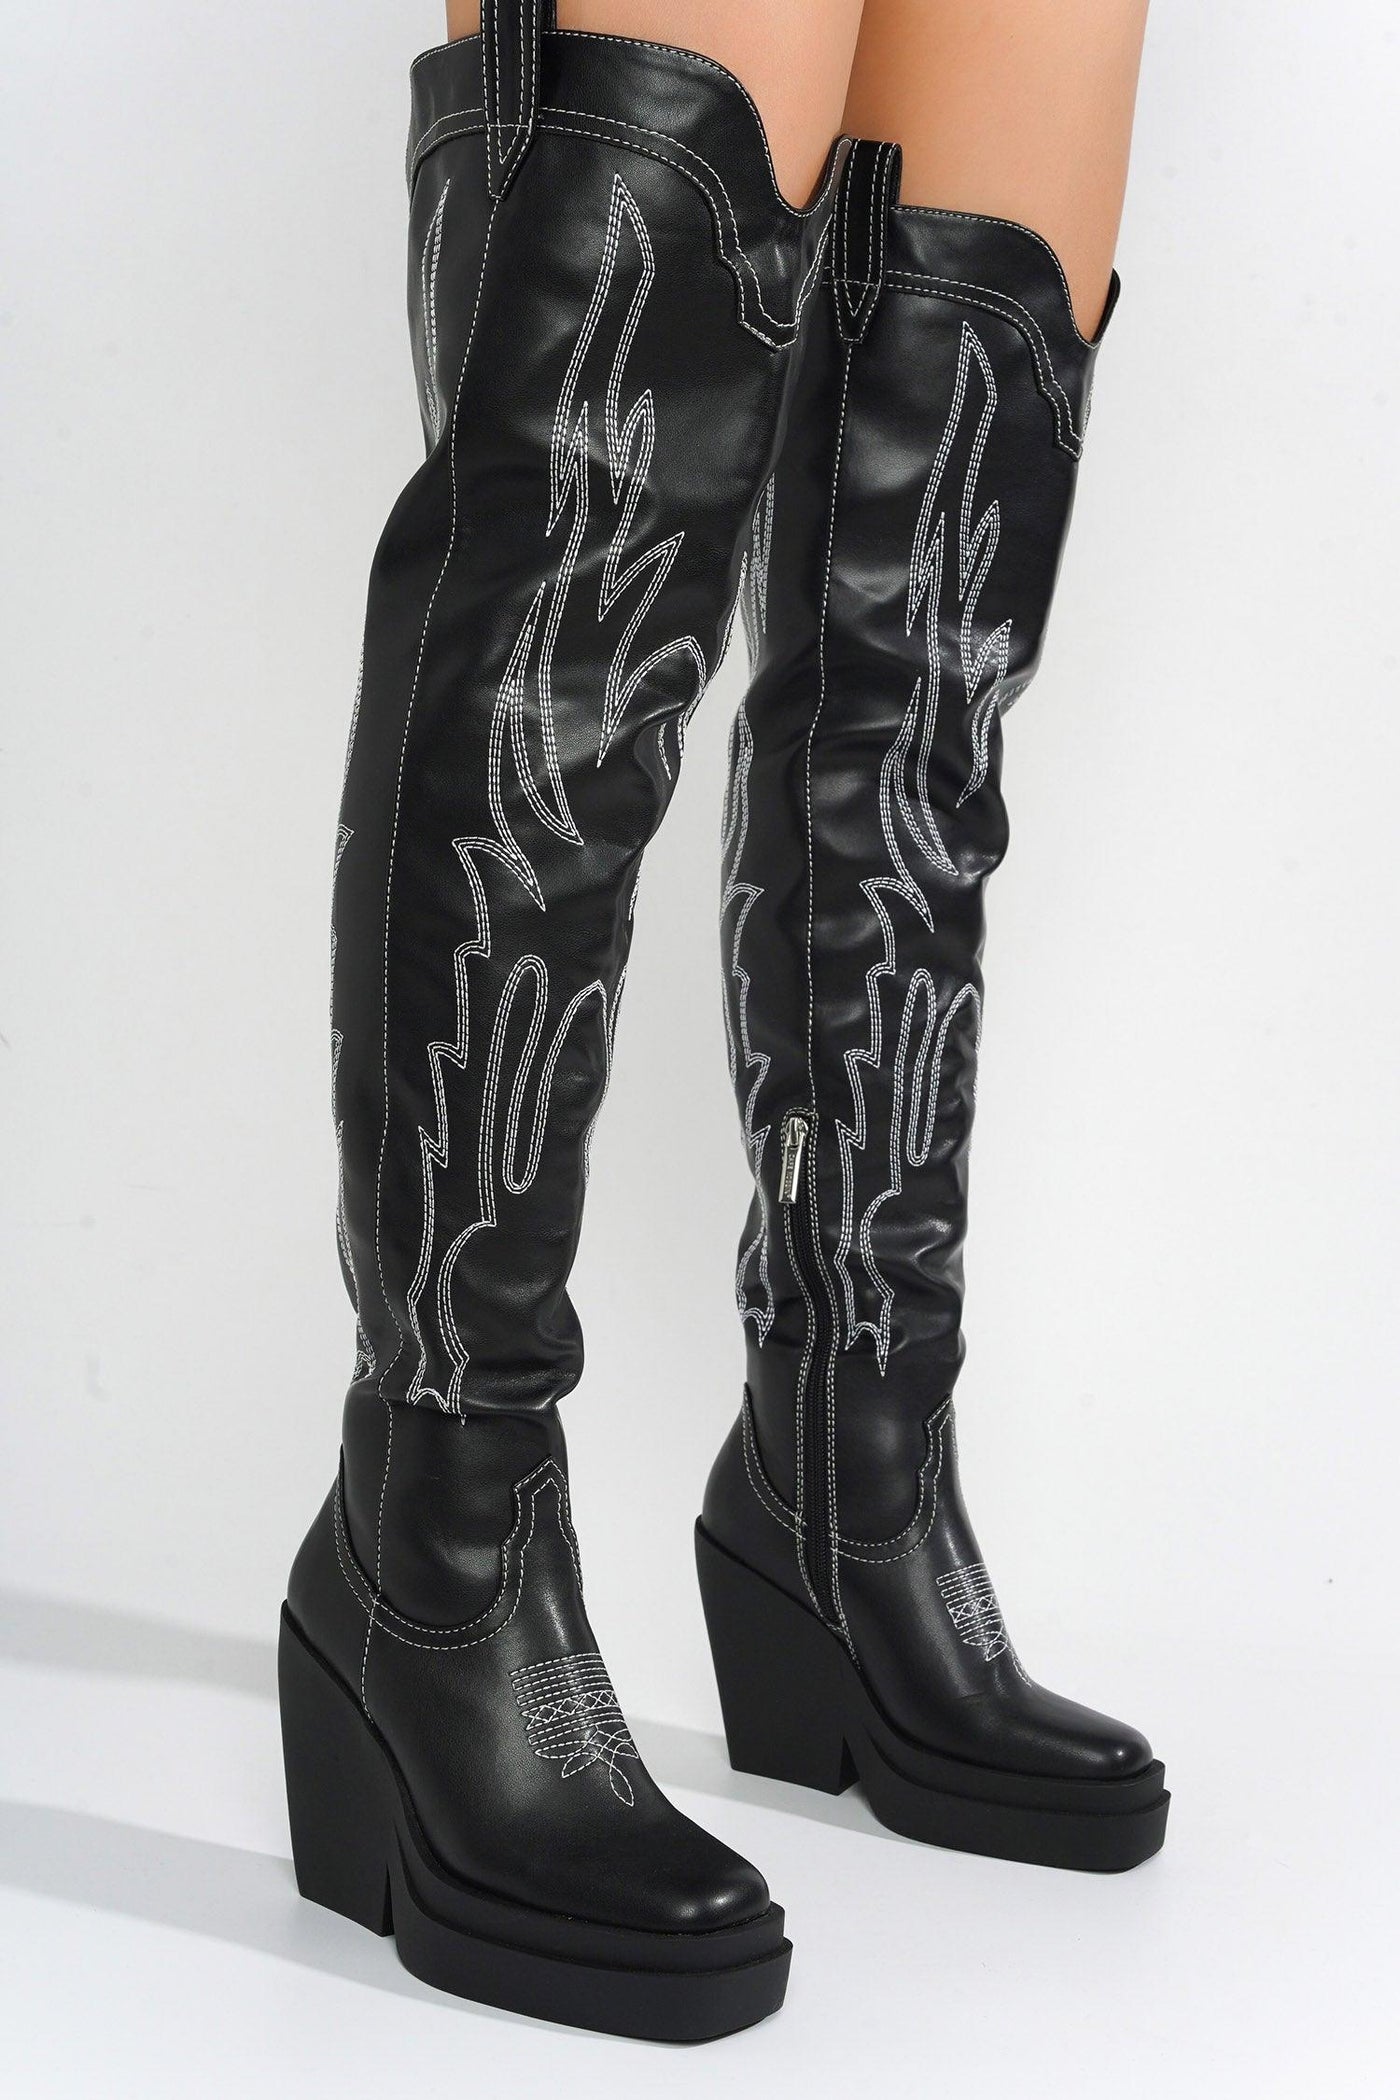 VIENTIANE - BLACK Thigh High Boots - AMIClubwear